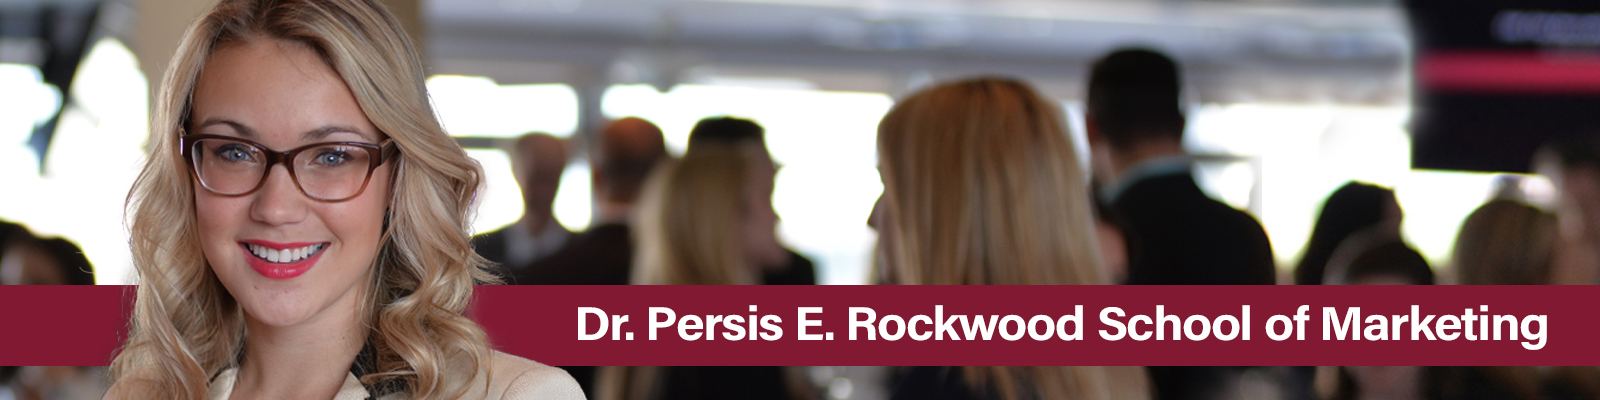 Dr. Persis E. Rockwood School of Marketing